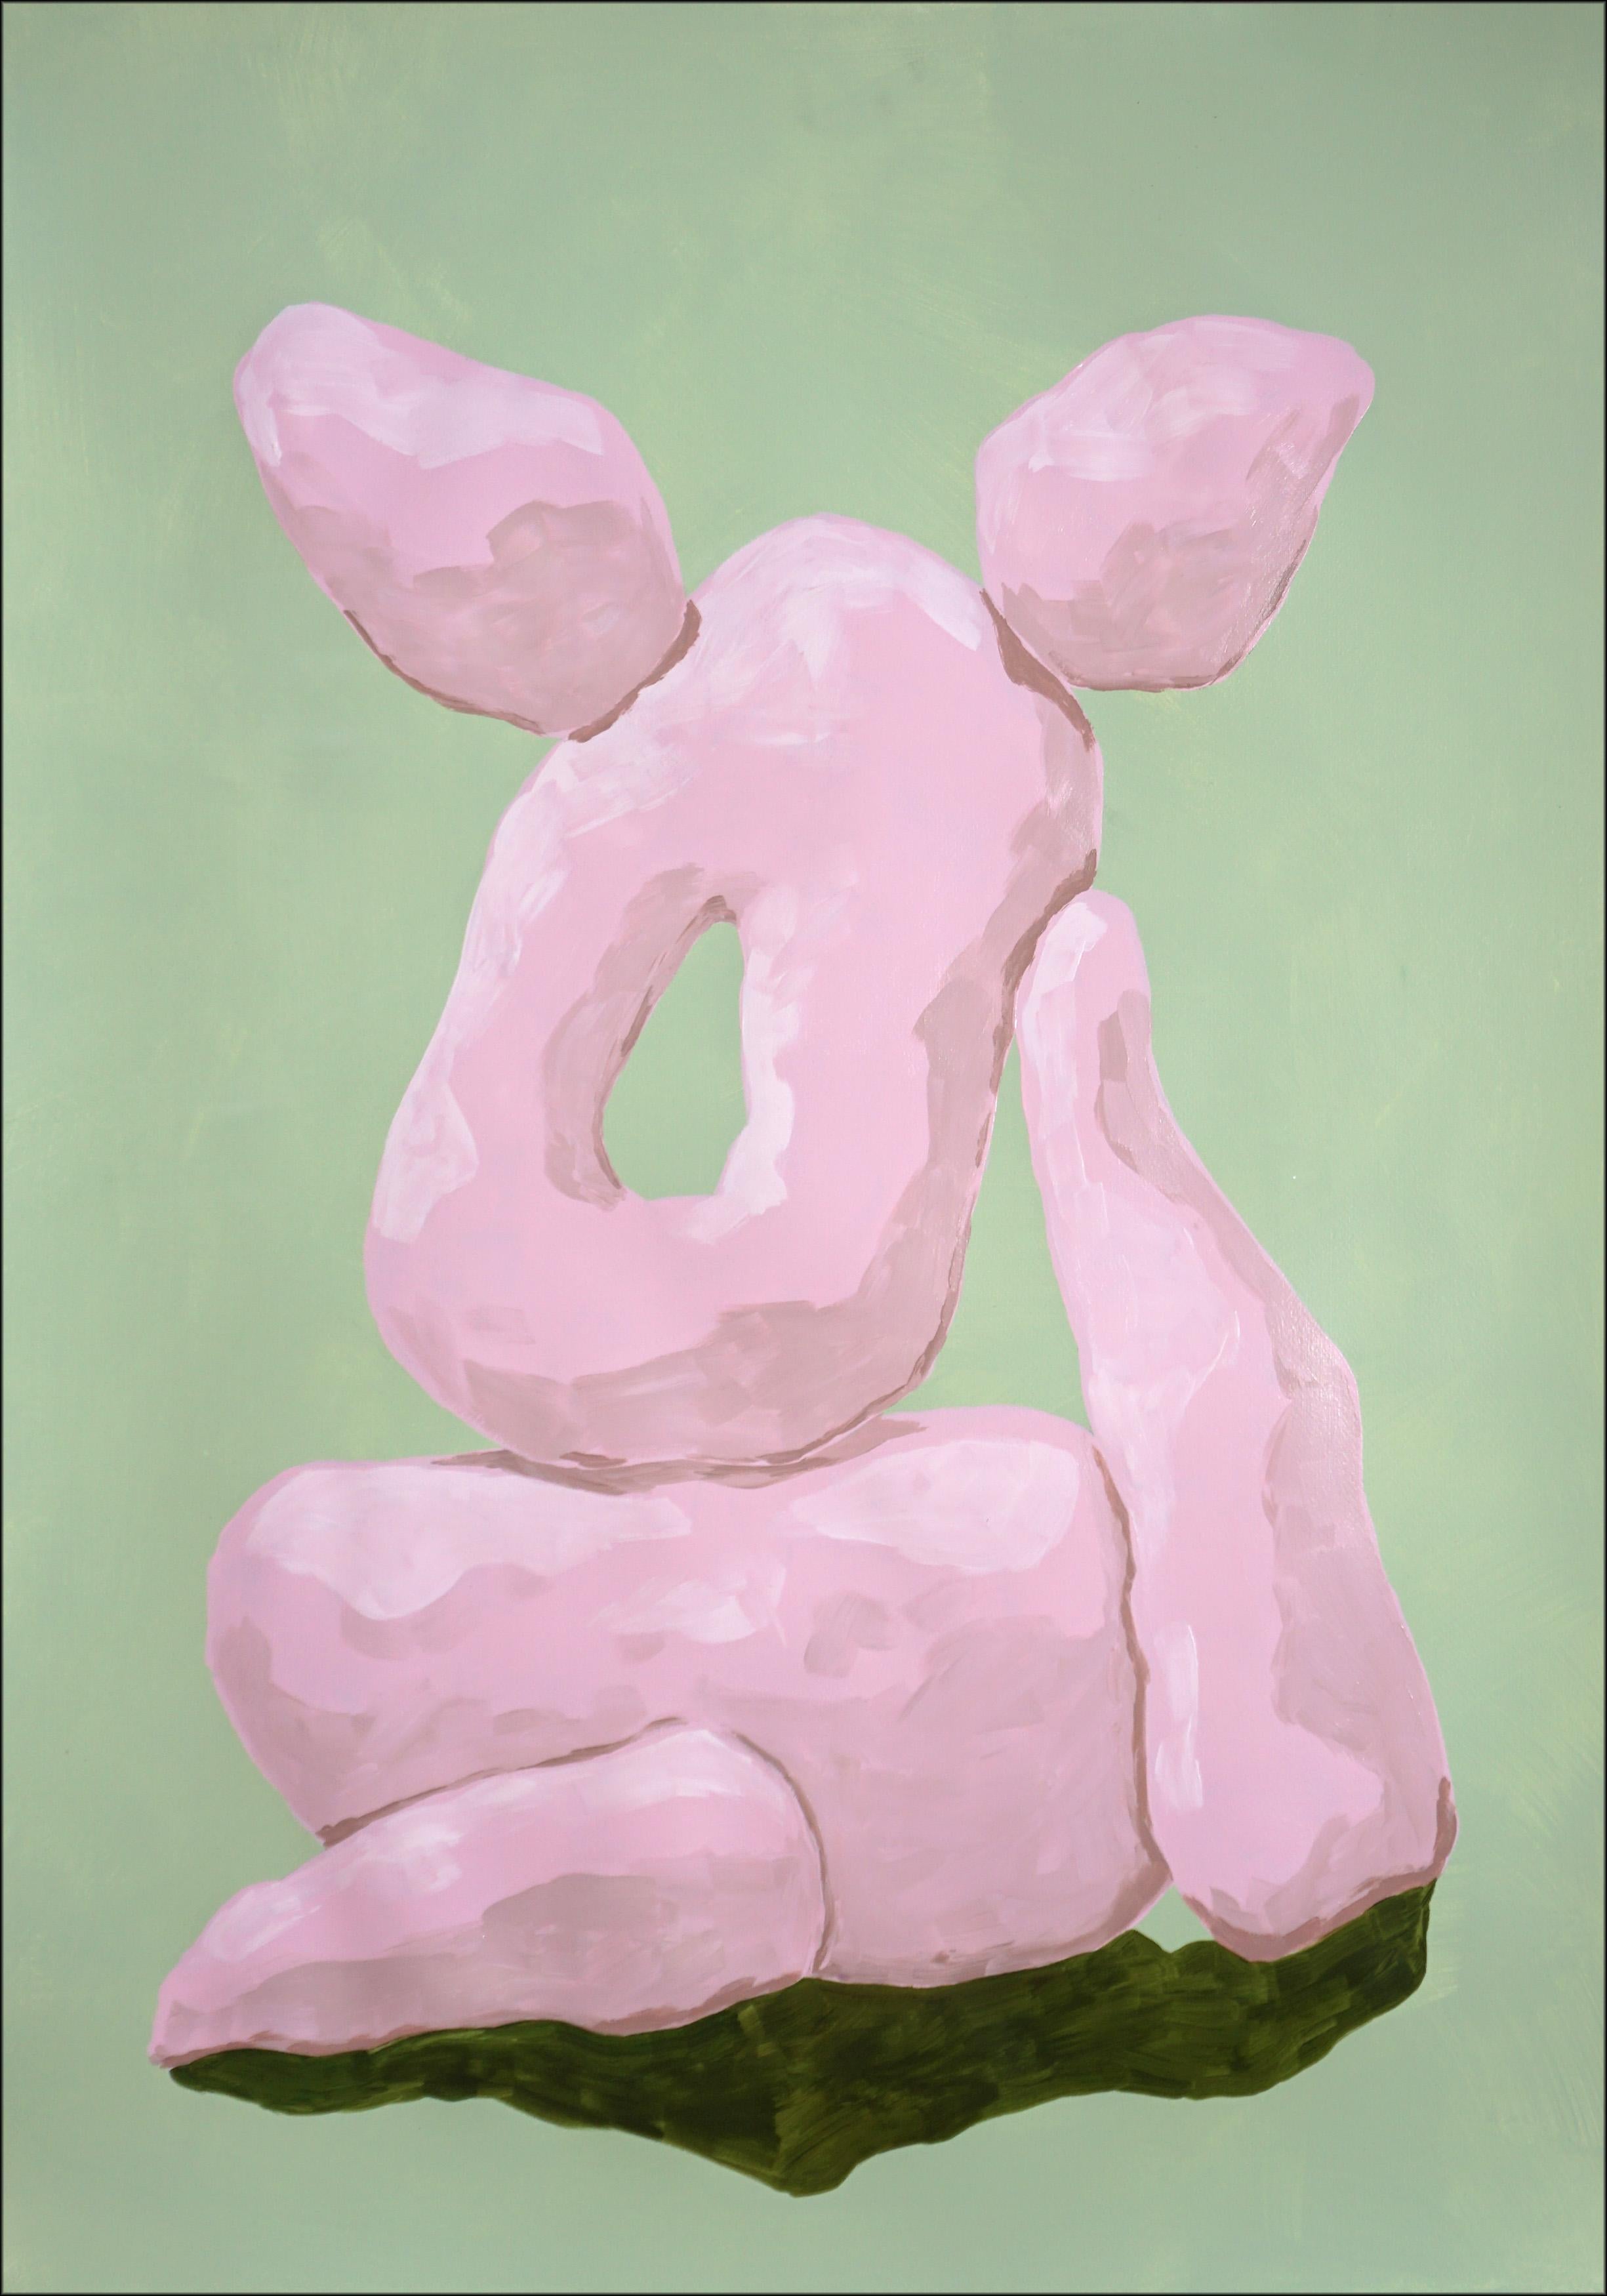 Abstract Painting Ryan Rivadeneyra - Sculptures roses sur vert, roches organiques, tons pastel, formes de rendu de jardin